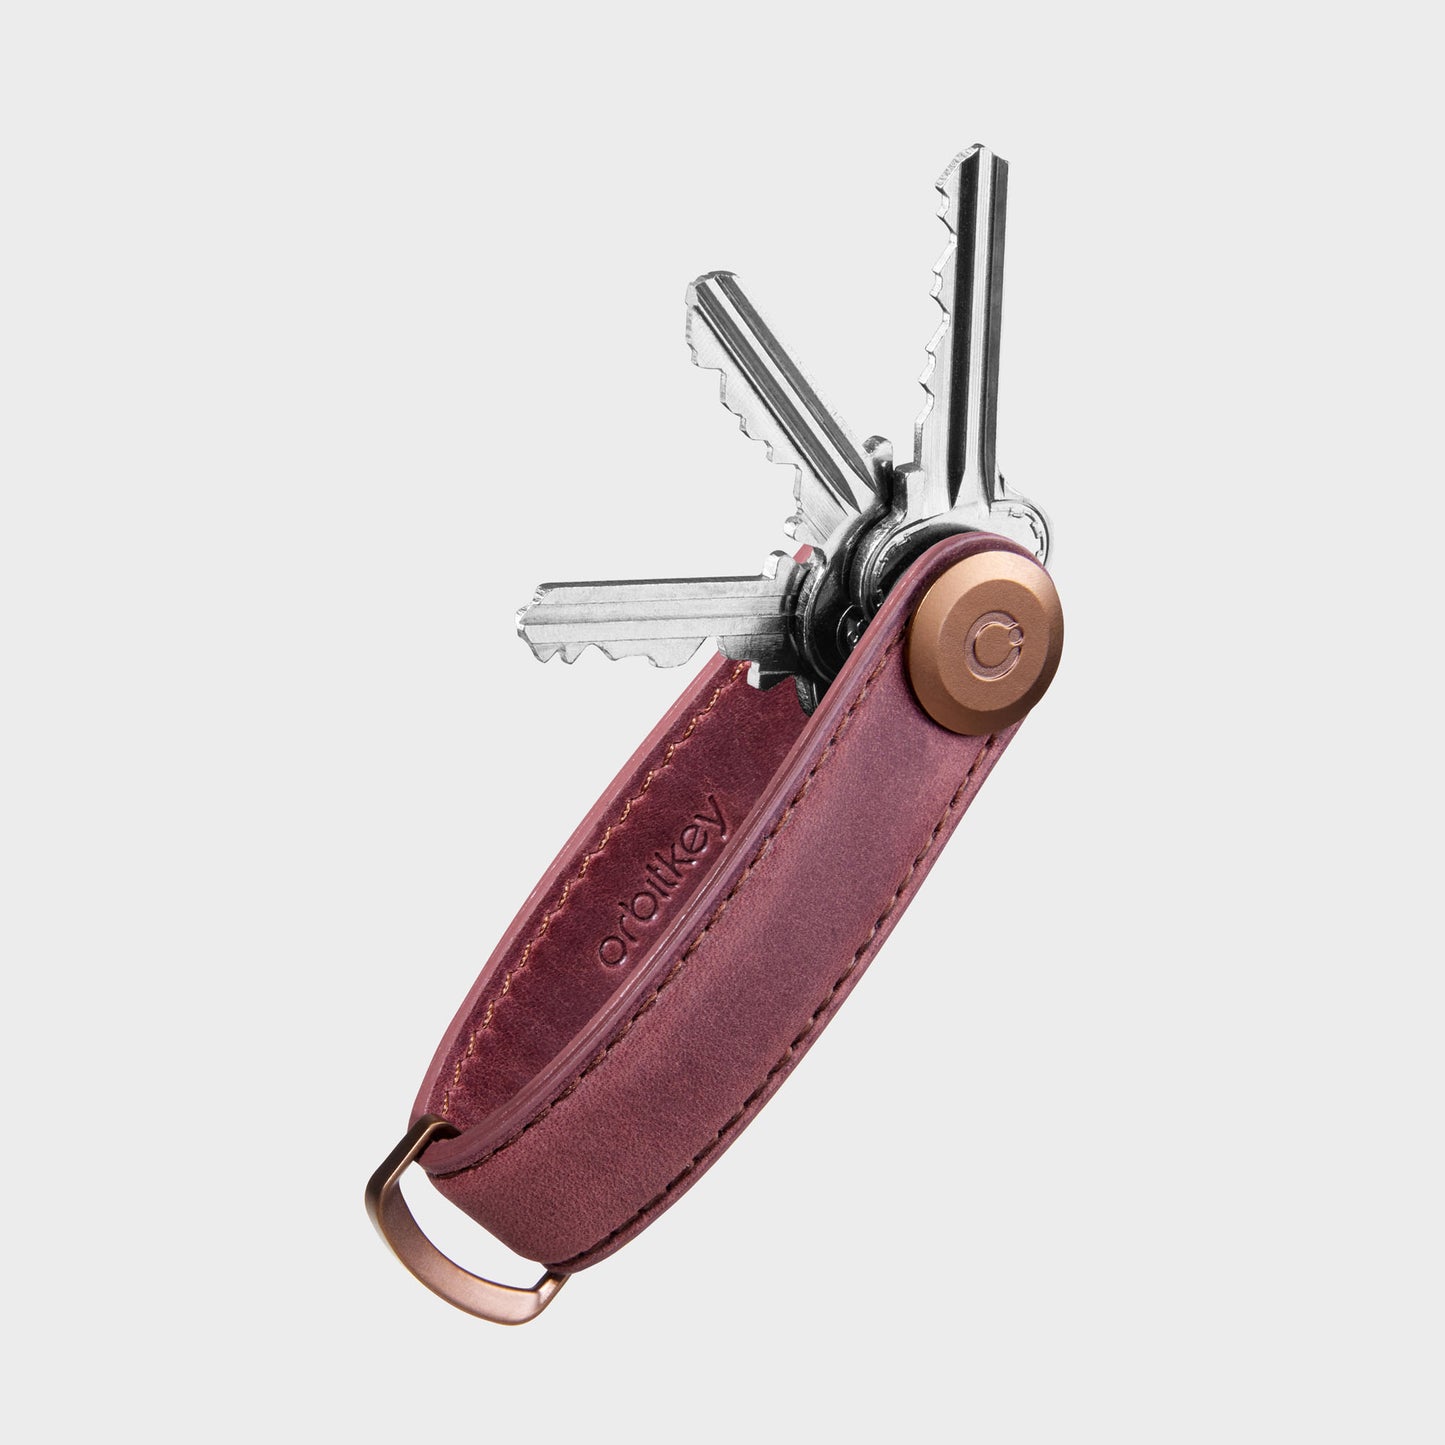 Leather Clip Keychain - Natural, Matte Black